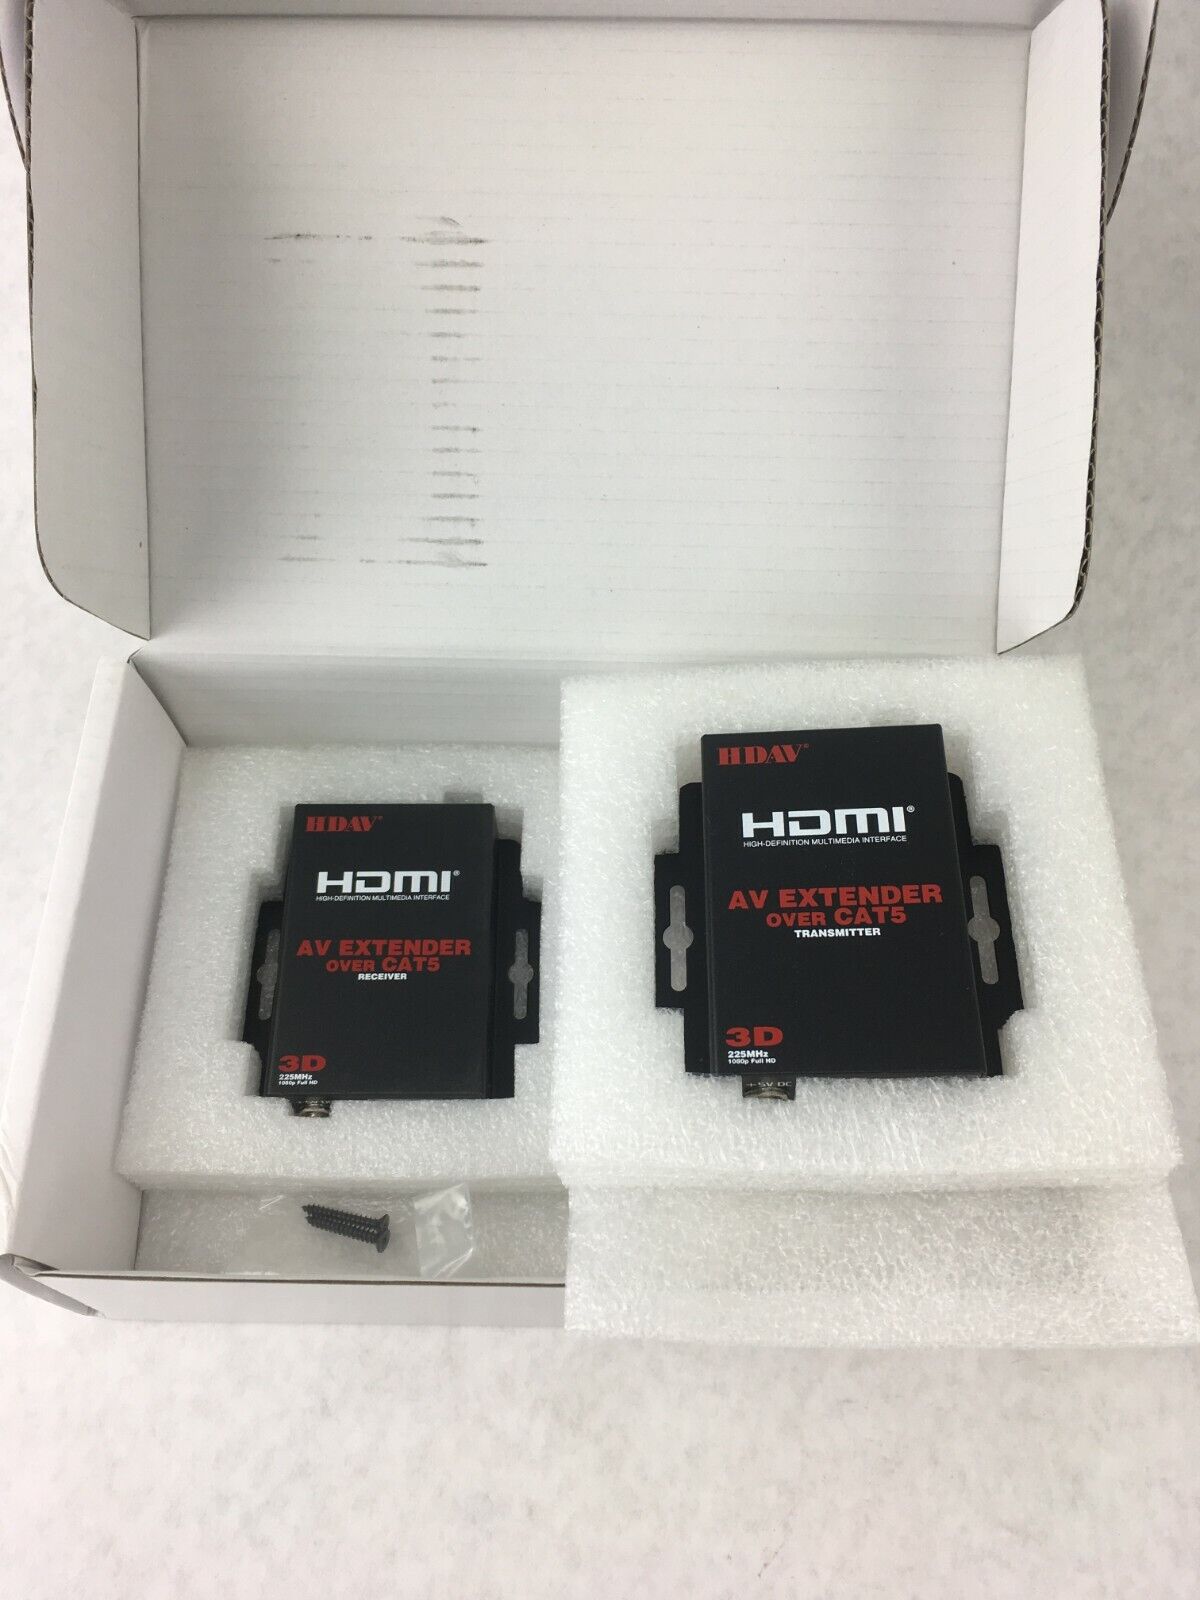 HDAV HD-C5S4 HDMI Audio Single Extender Over CAT5 UTP HD 3D 1080p Lot of 2